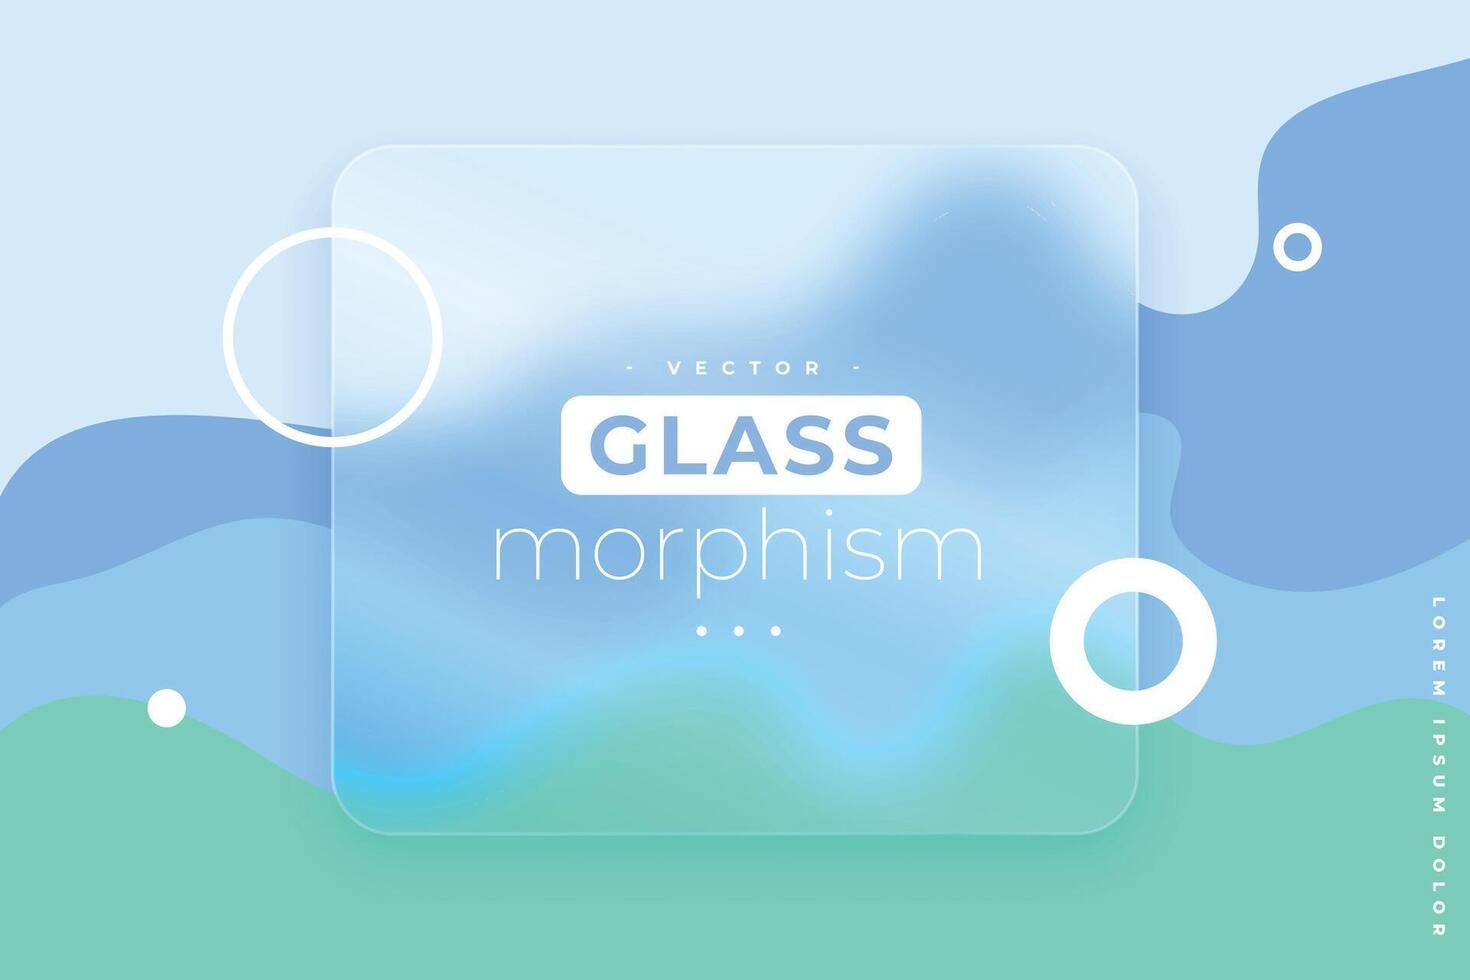 fluid style glass morphism wallpaper design for modern info card vector